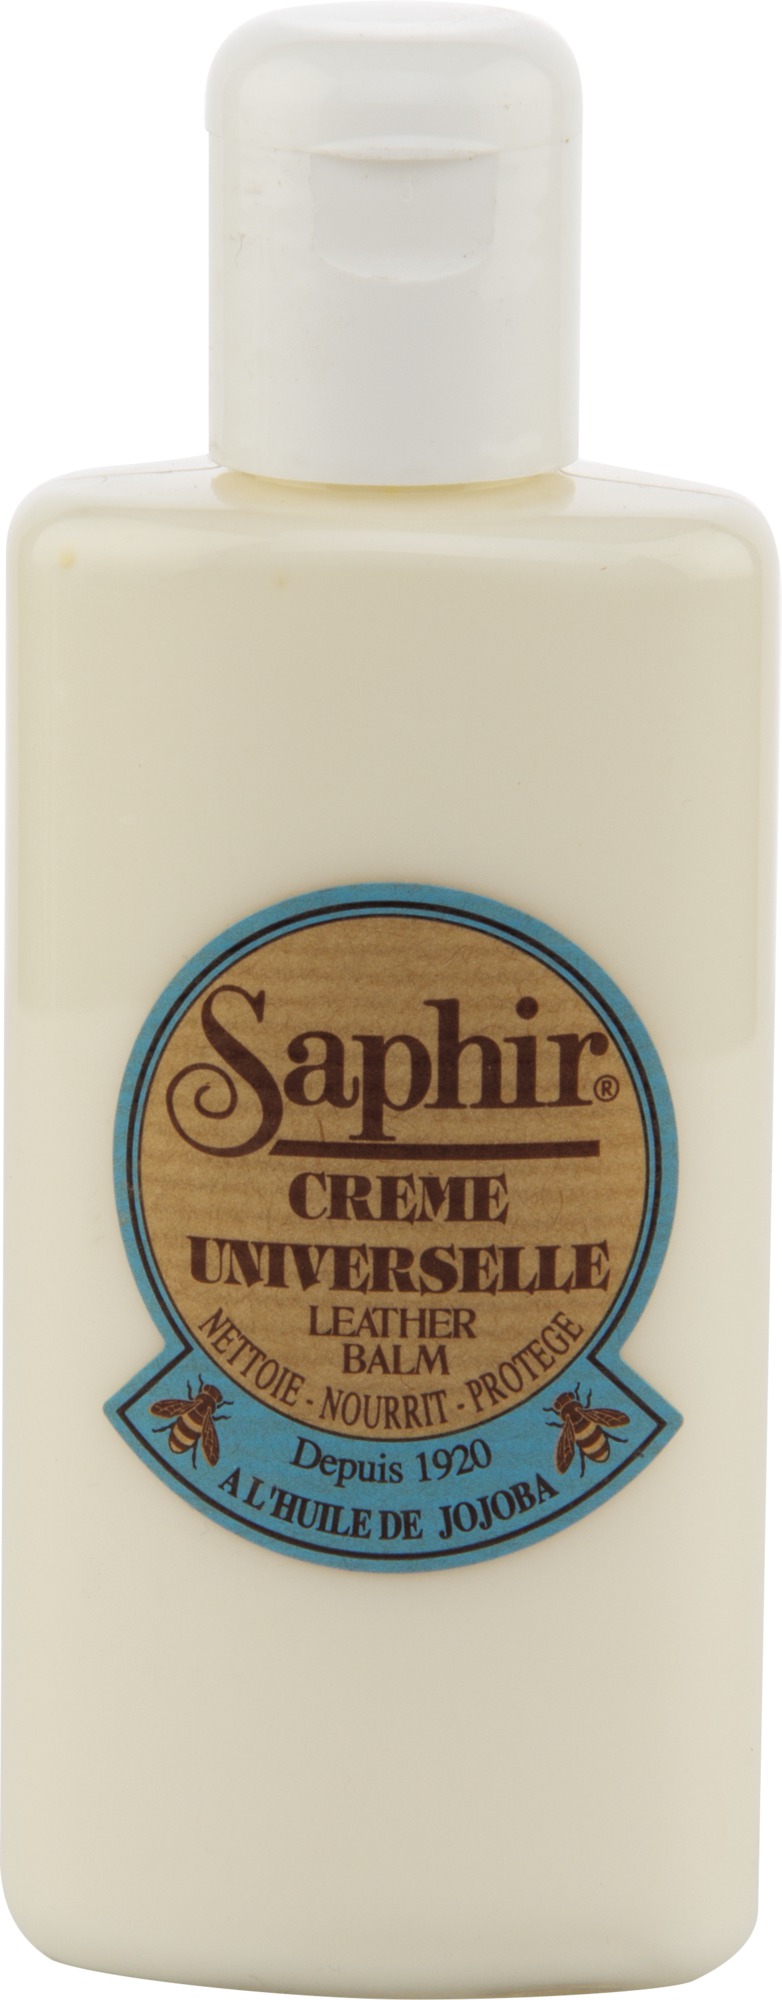 Crème universelle Saphir - 150 ml - Blanc